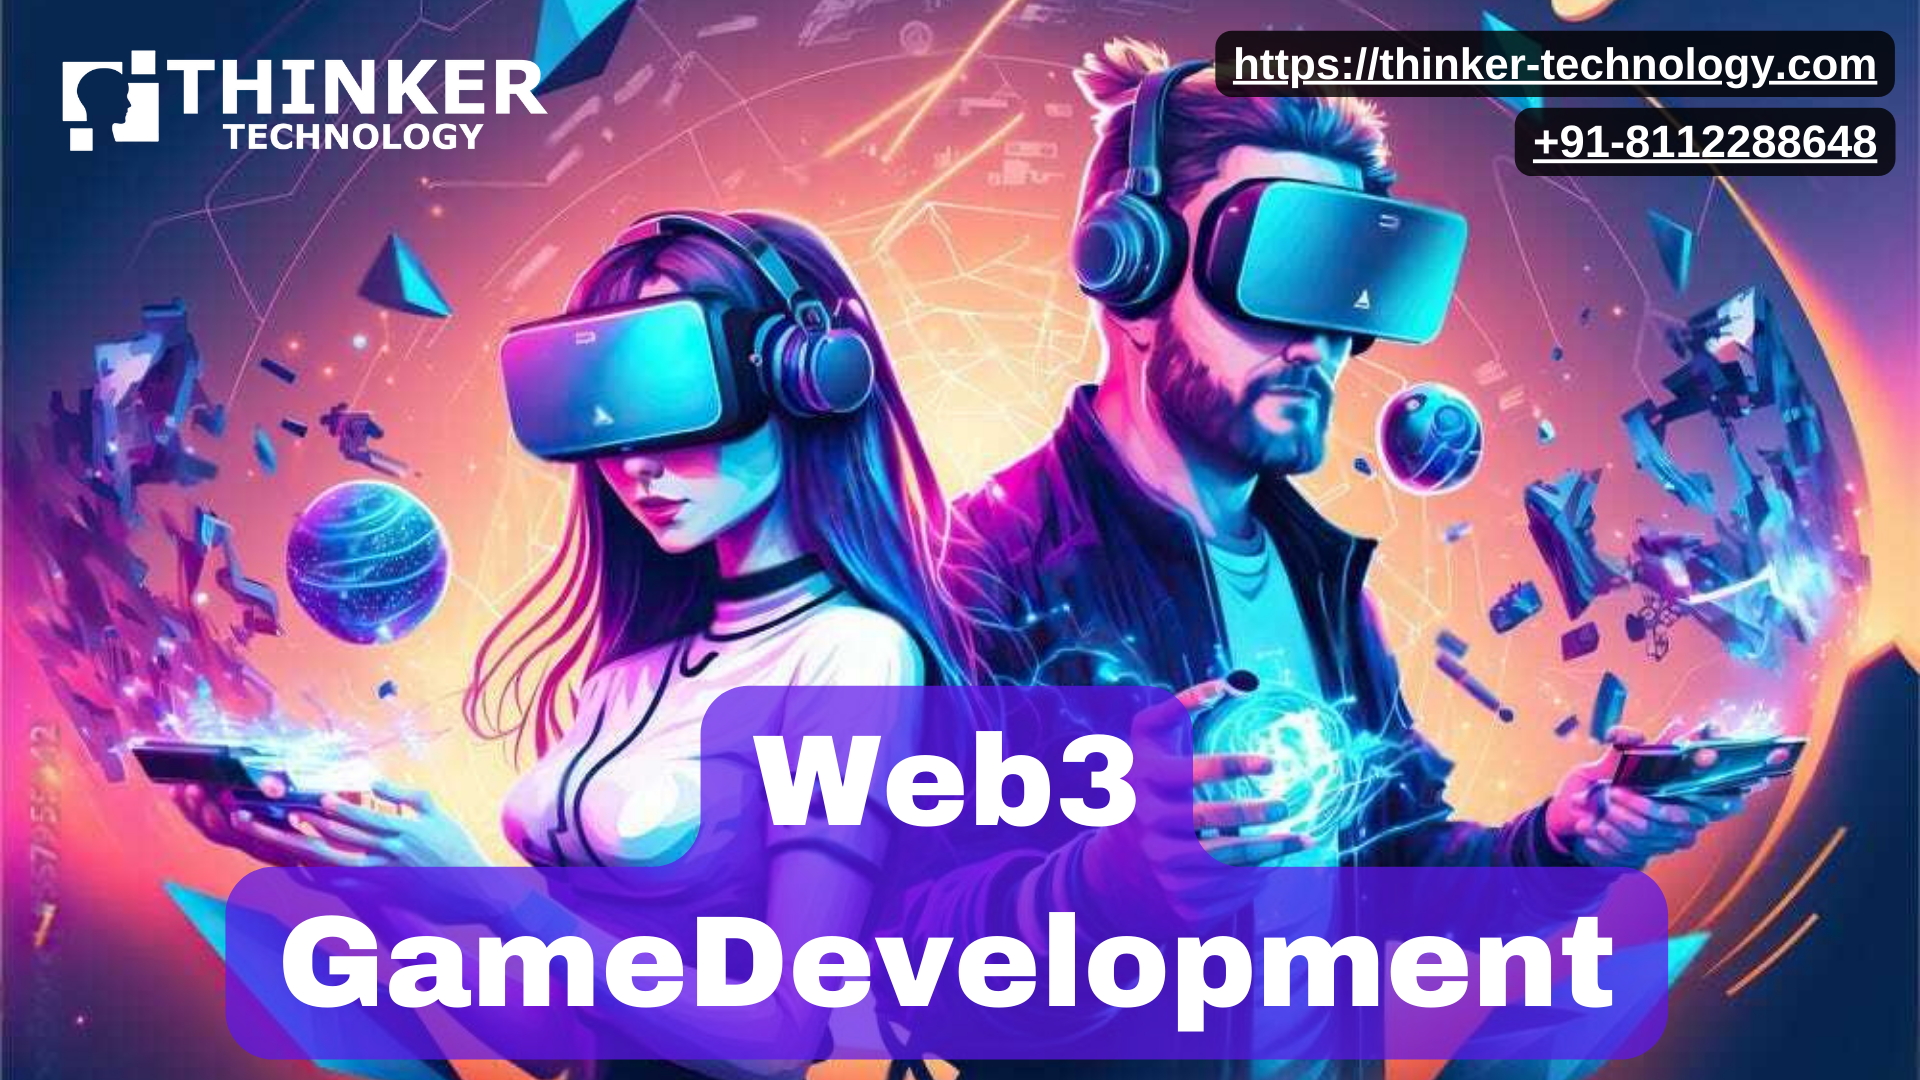 Thinker Technology is Best Blockchain WEB3 Game Development Company in Jaipur